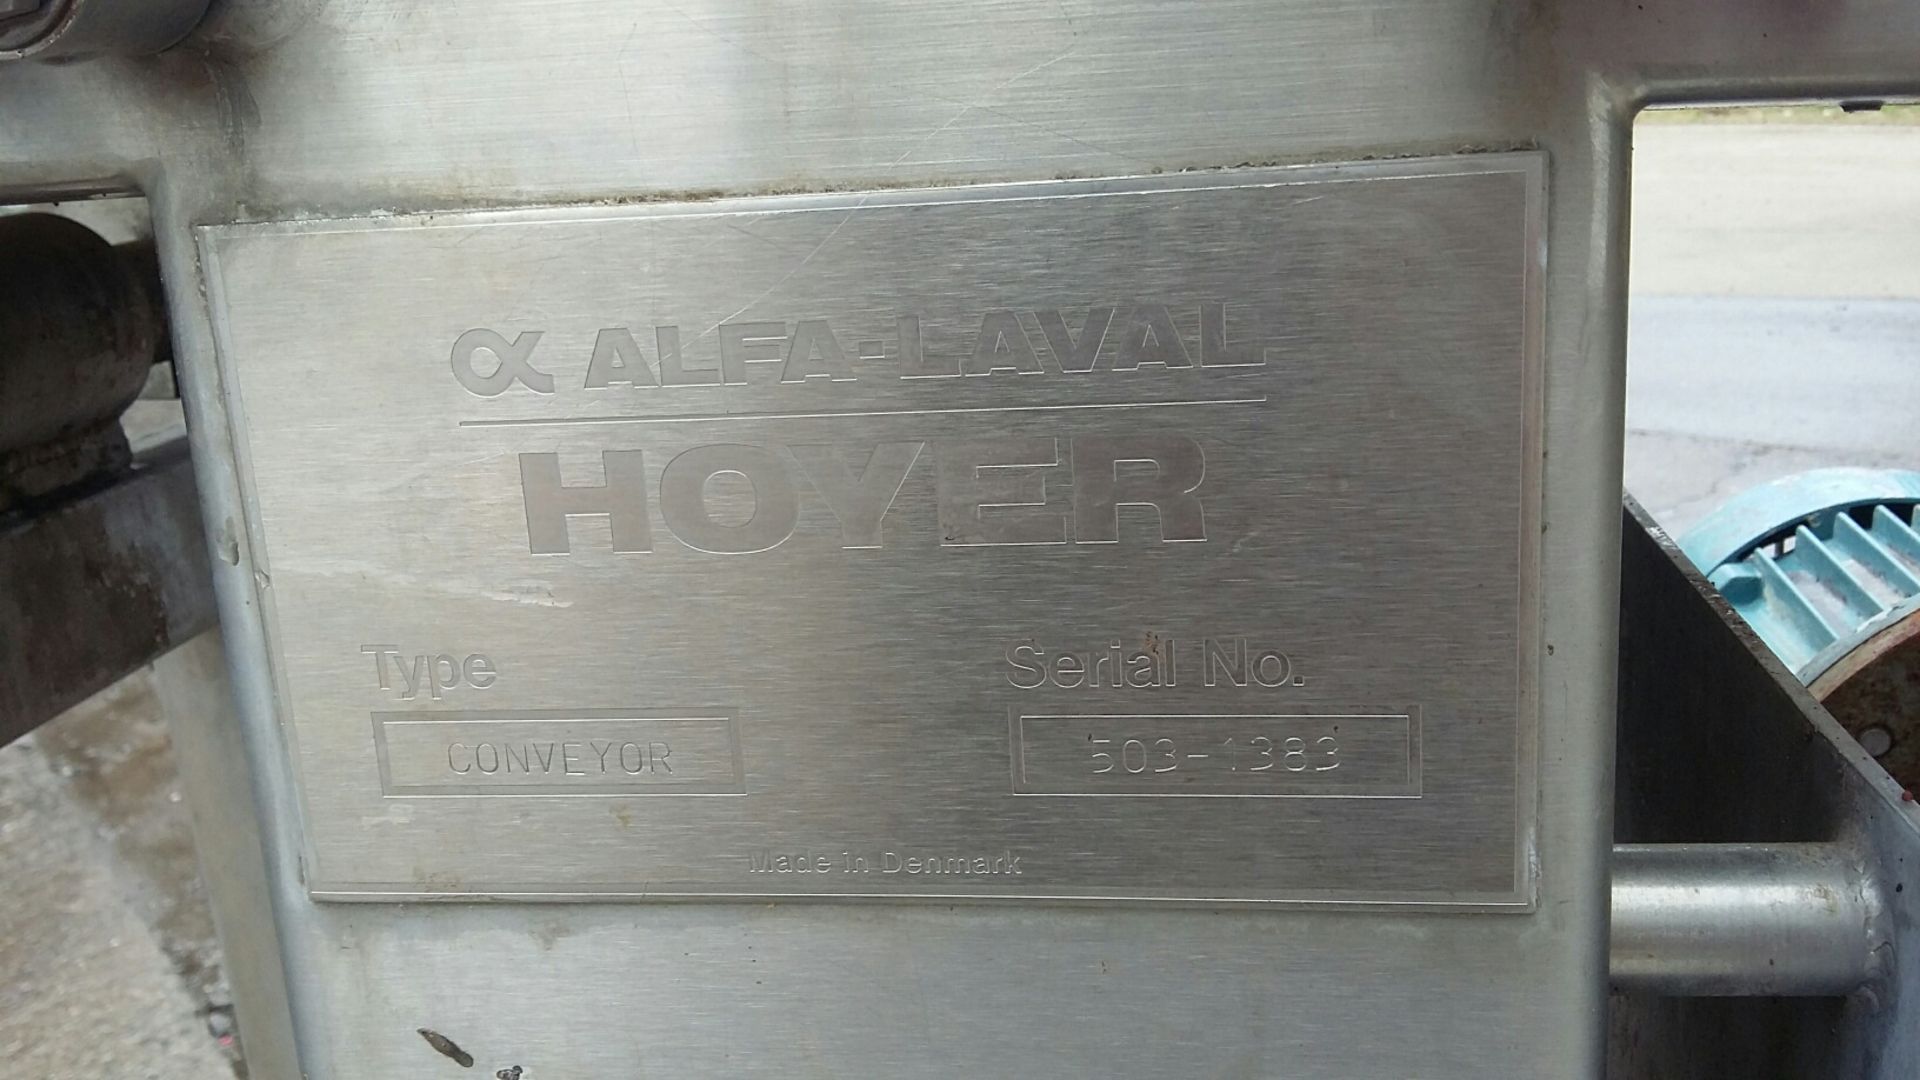 Alfa-Laval Flat Belt Conveyor, 3 phase, with start - Image 4 of 4